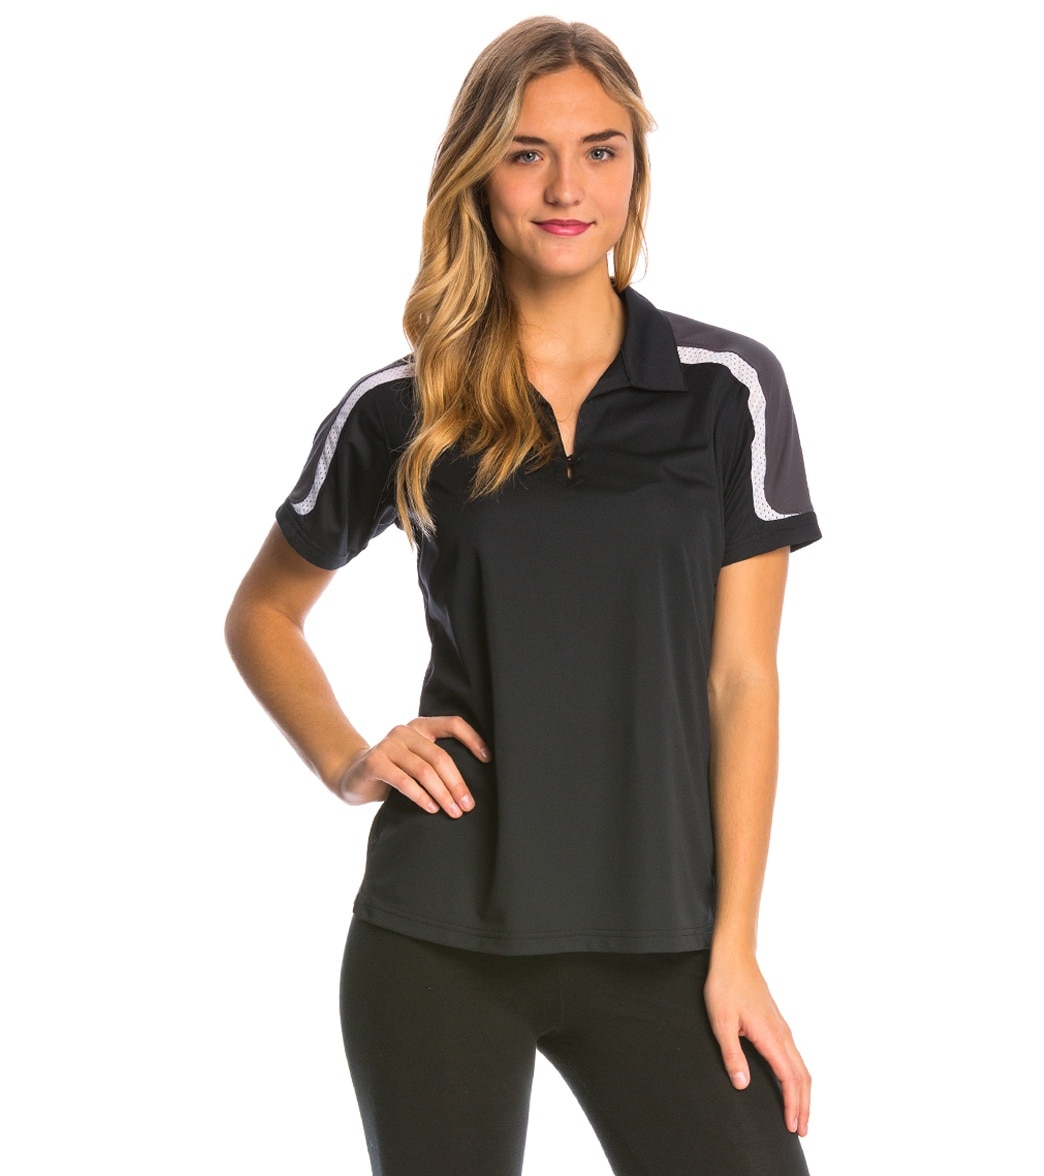 Women's Tech Polo - Black/Iron Grey/White 2Xl Polyester - Swimoutlet.com